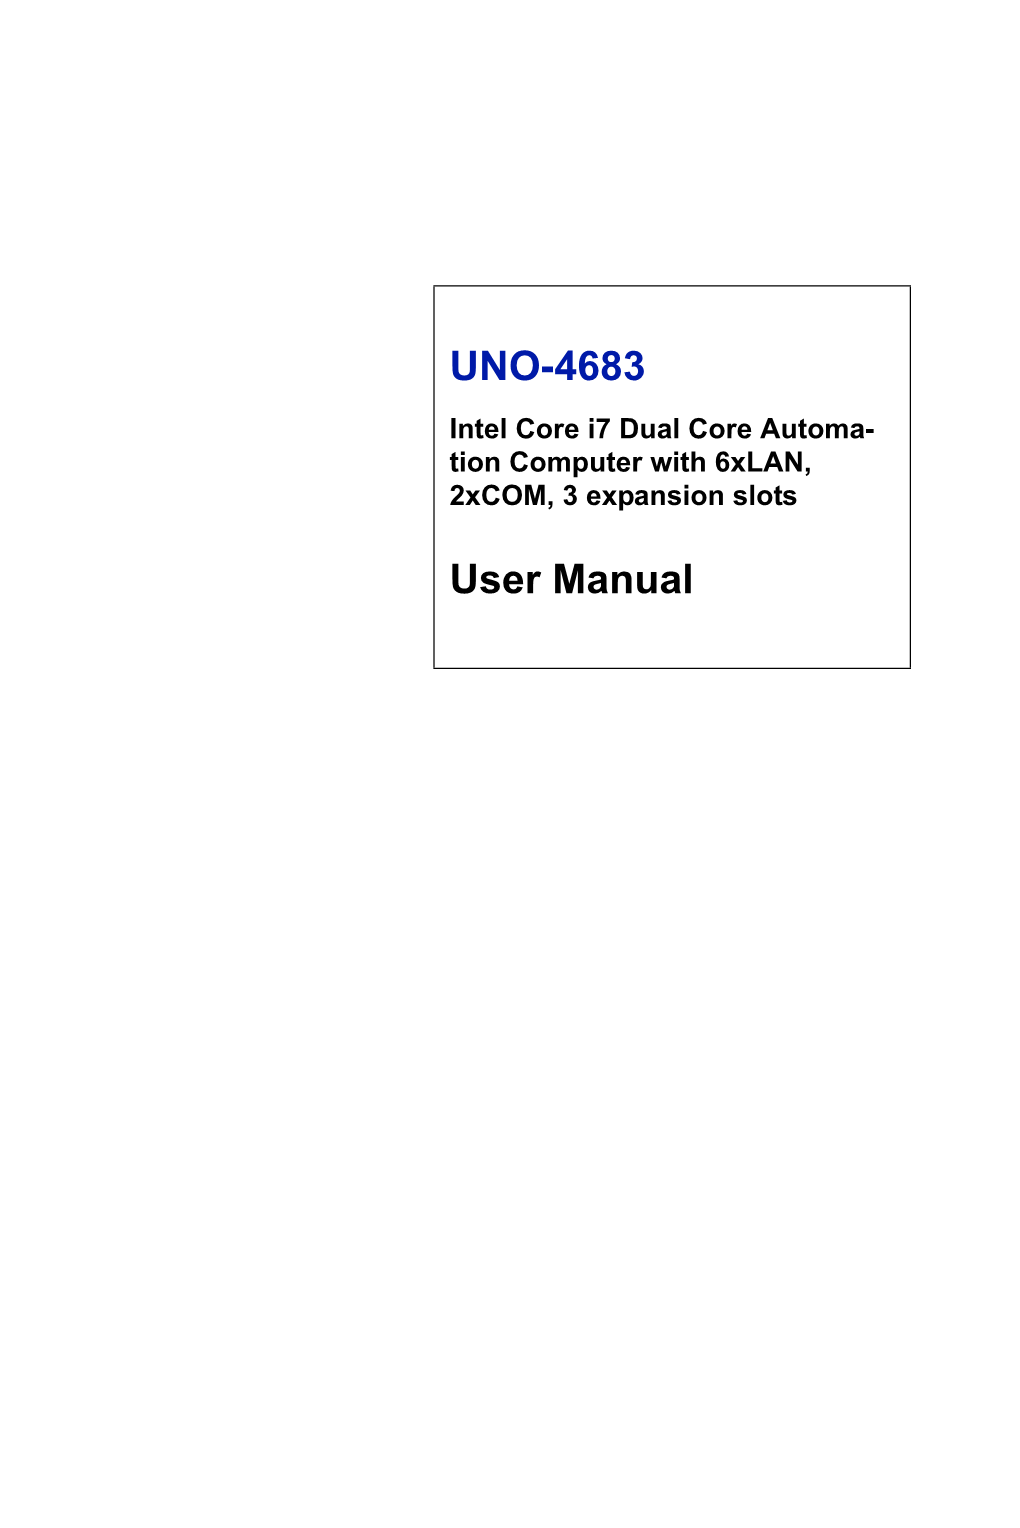 UNO-4683 User Manual